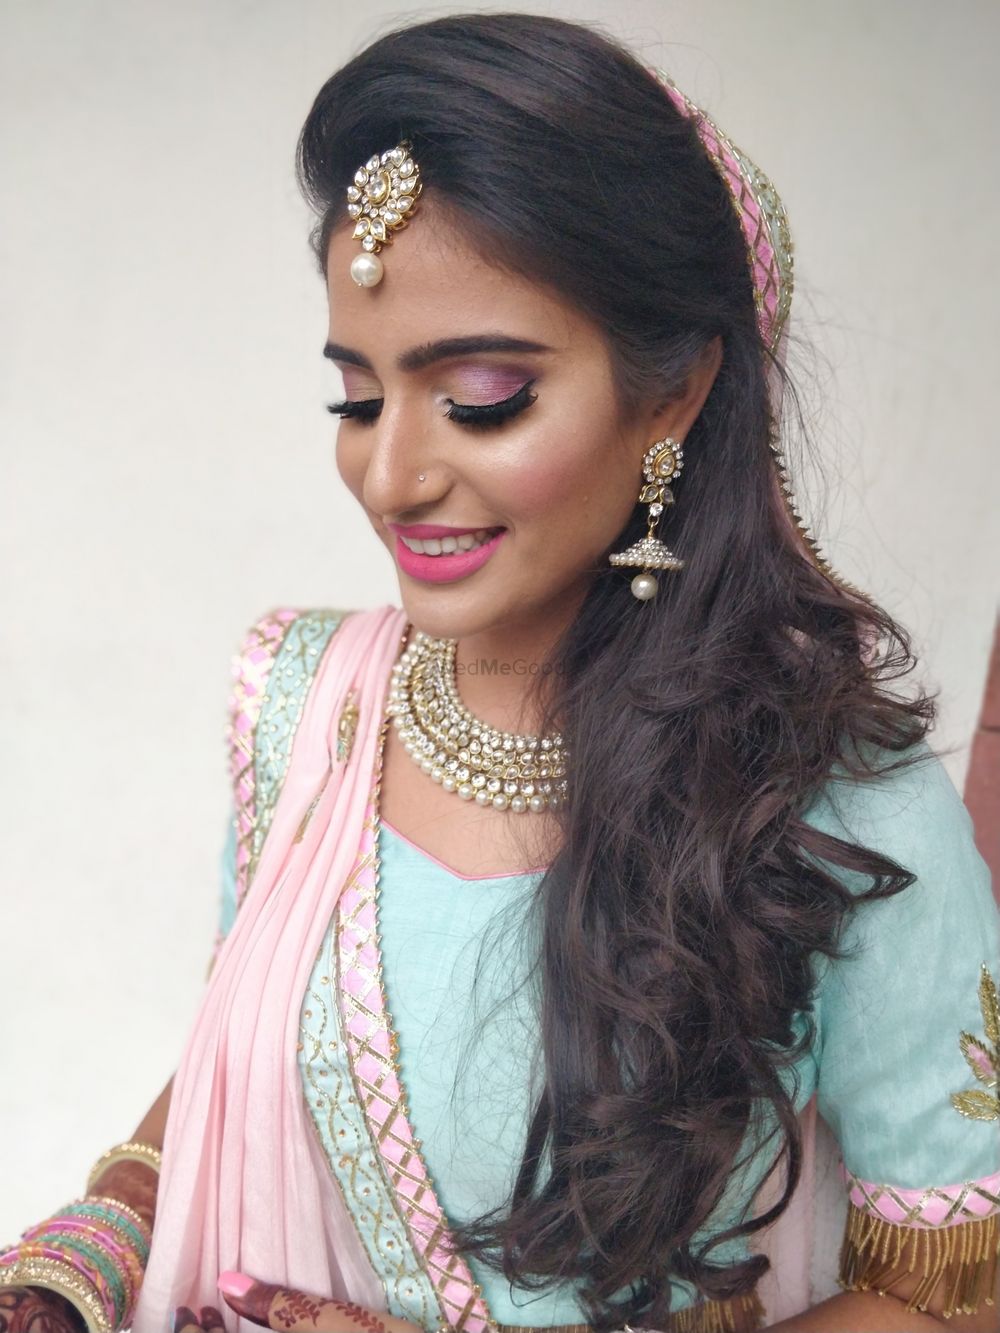 Photo By Silhouette By Swati Rohila - Bridal Wear